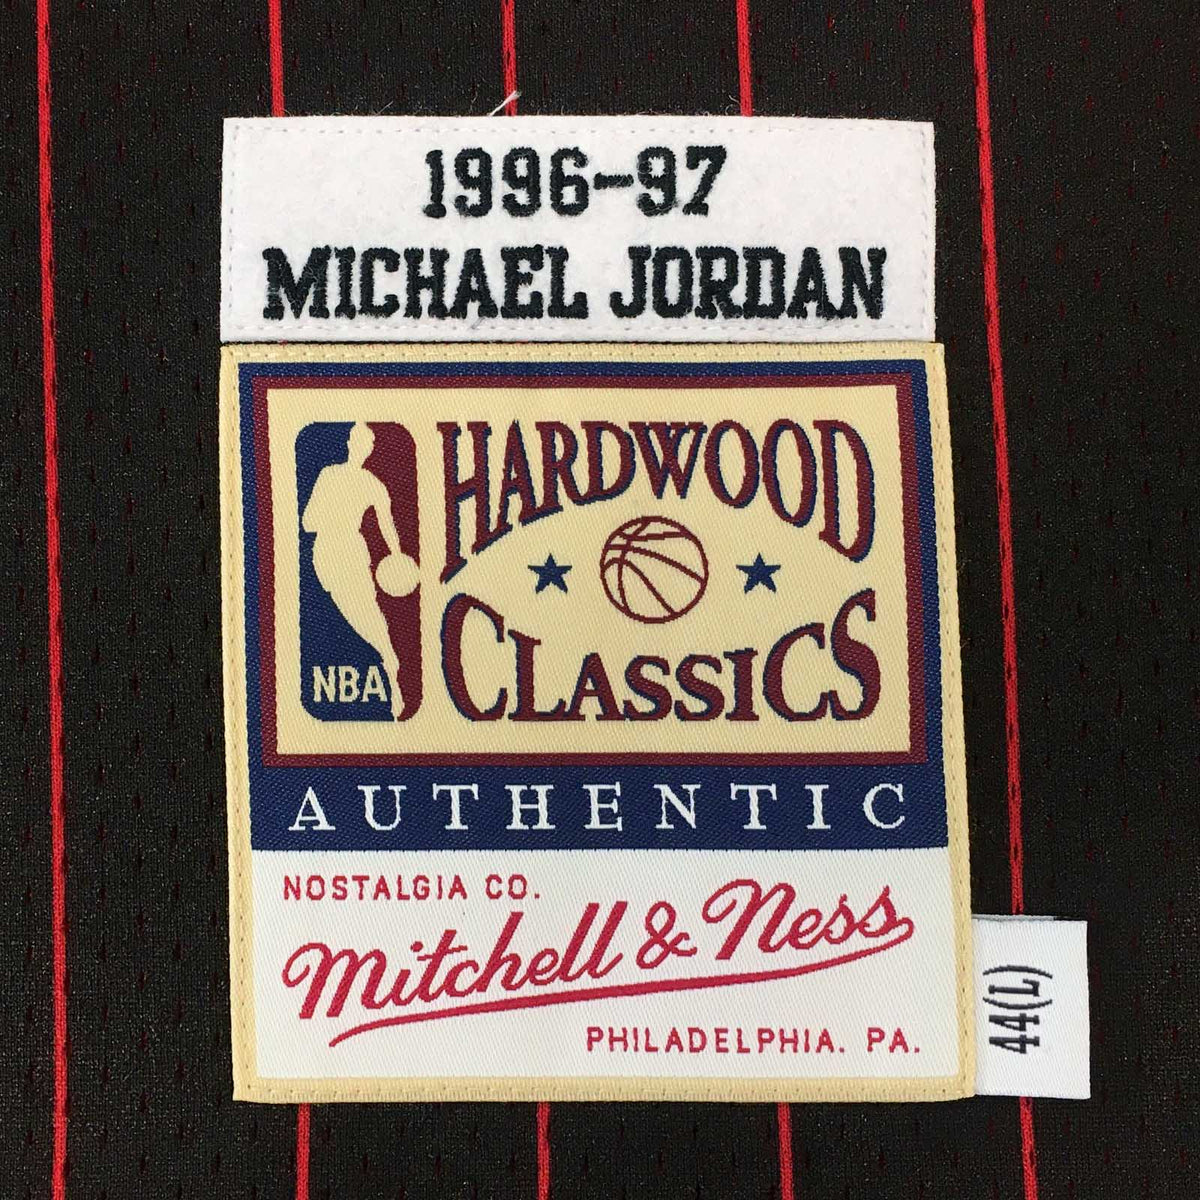 Nike Mens Michael Jordan NBA Authentic Jersey Red Size 44